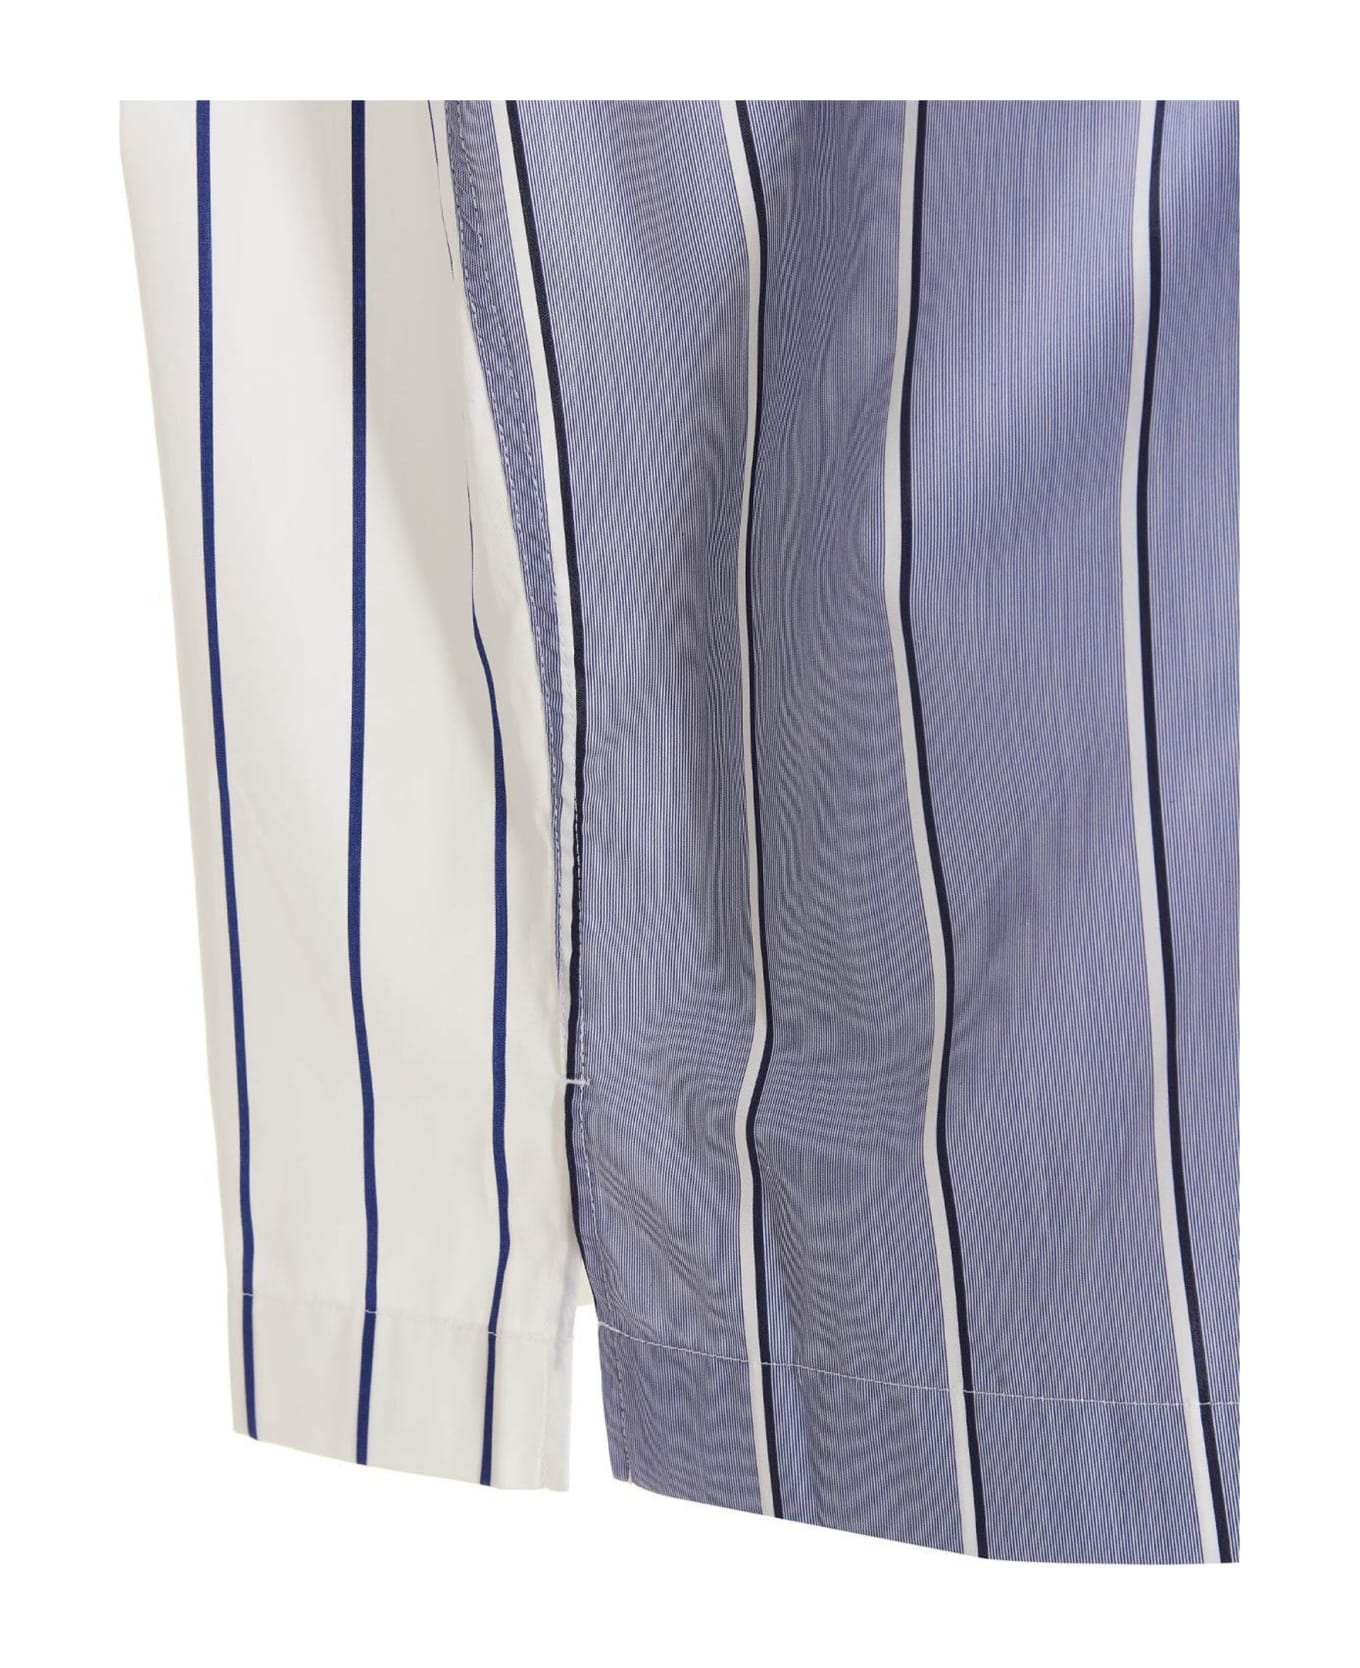 J.W. Anderson Striped Shirt - Light Blue